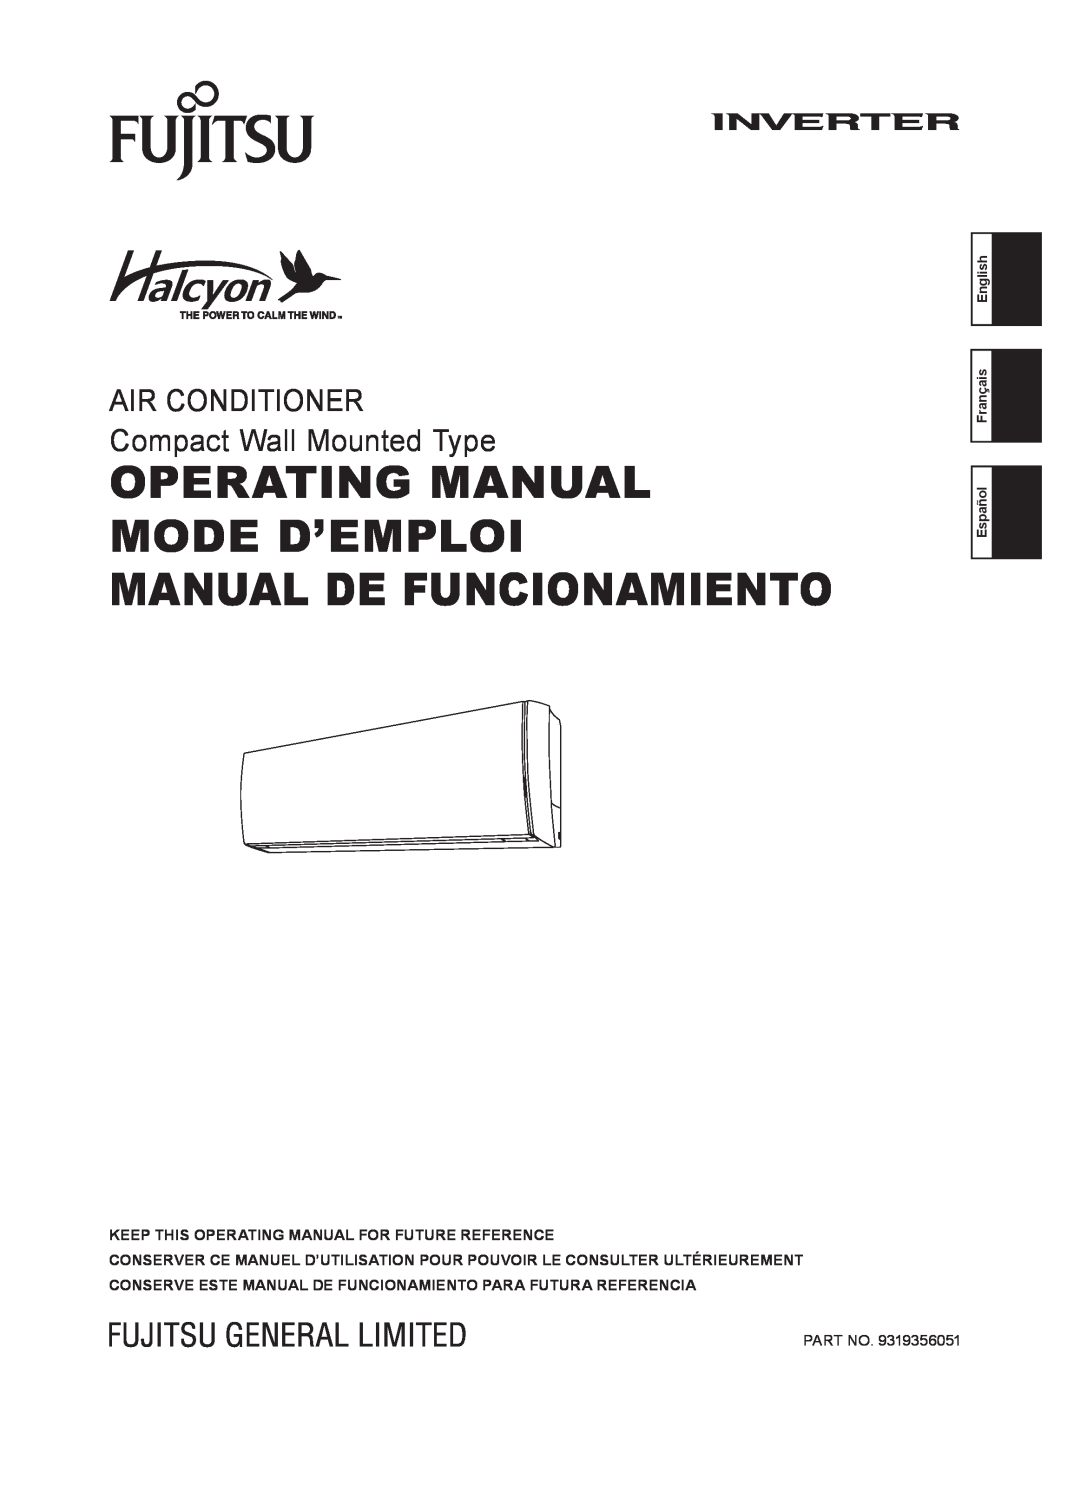 Fujitsu 9319356051, AIR CONDITIONER manuel dutilisation Operating Manual Mode D’Emploi, Manual De Funcionamiento 